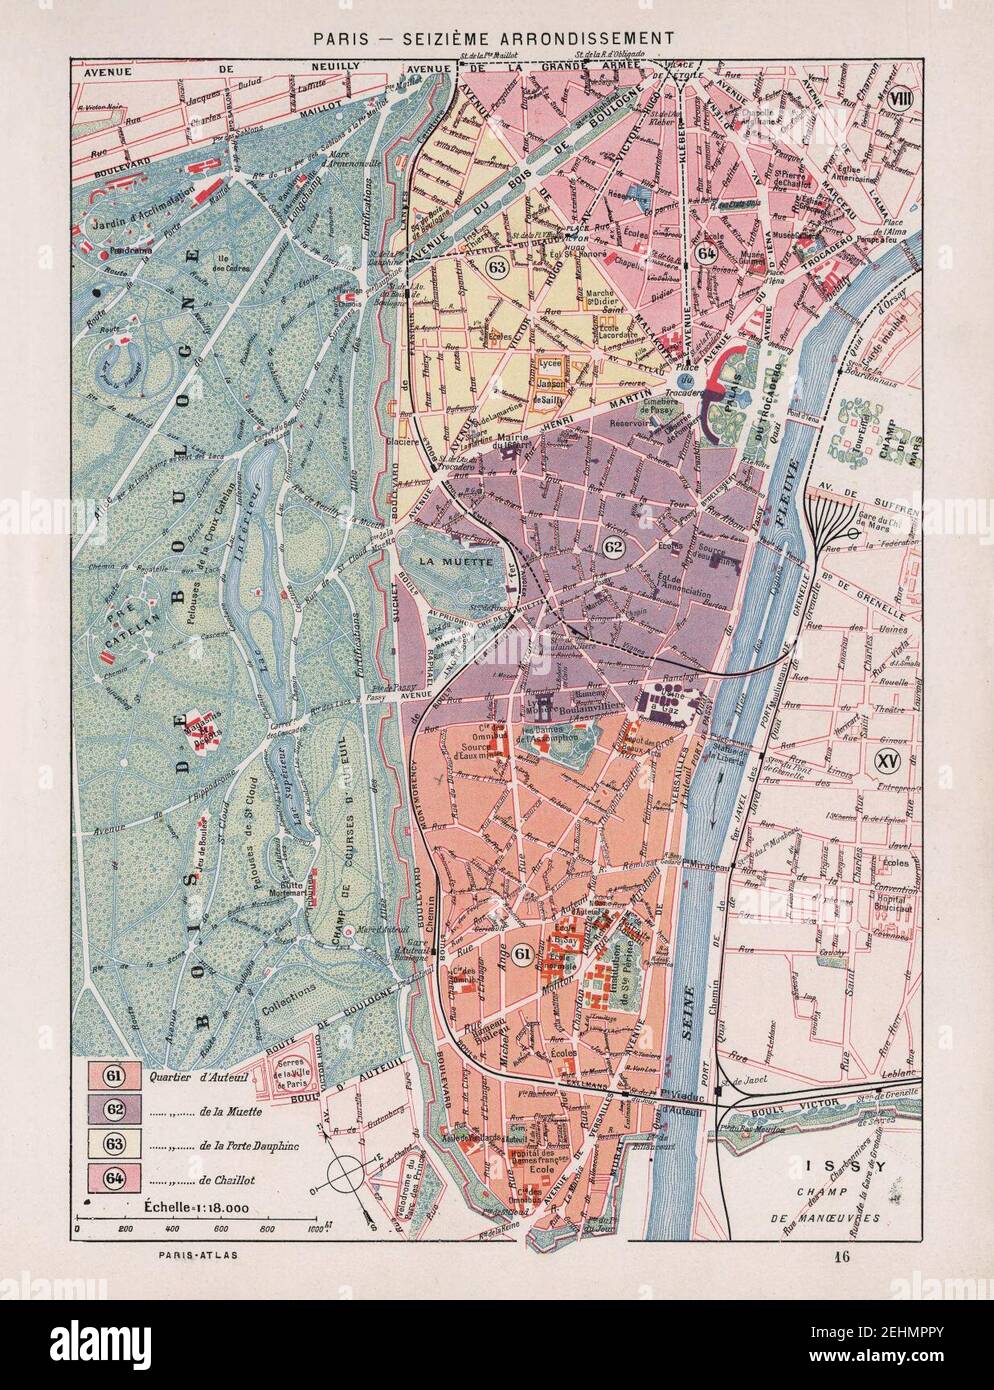 Paris-atlas by Fernand Bournon - 38. 16e arrondissement - David Rumsey. Stock Photo